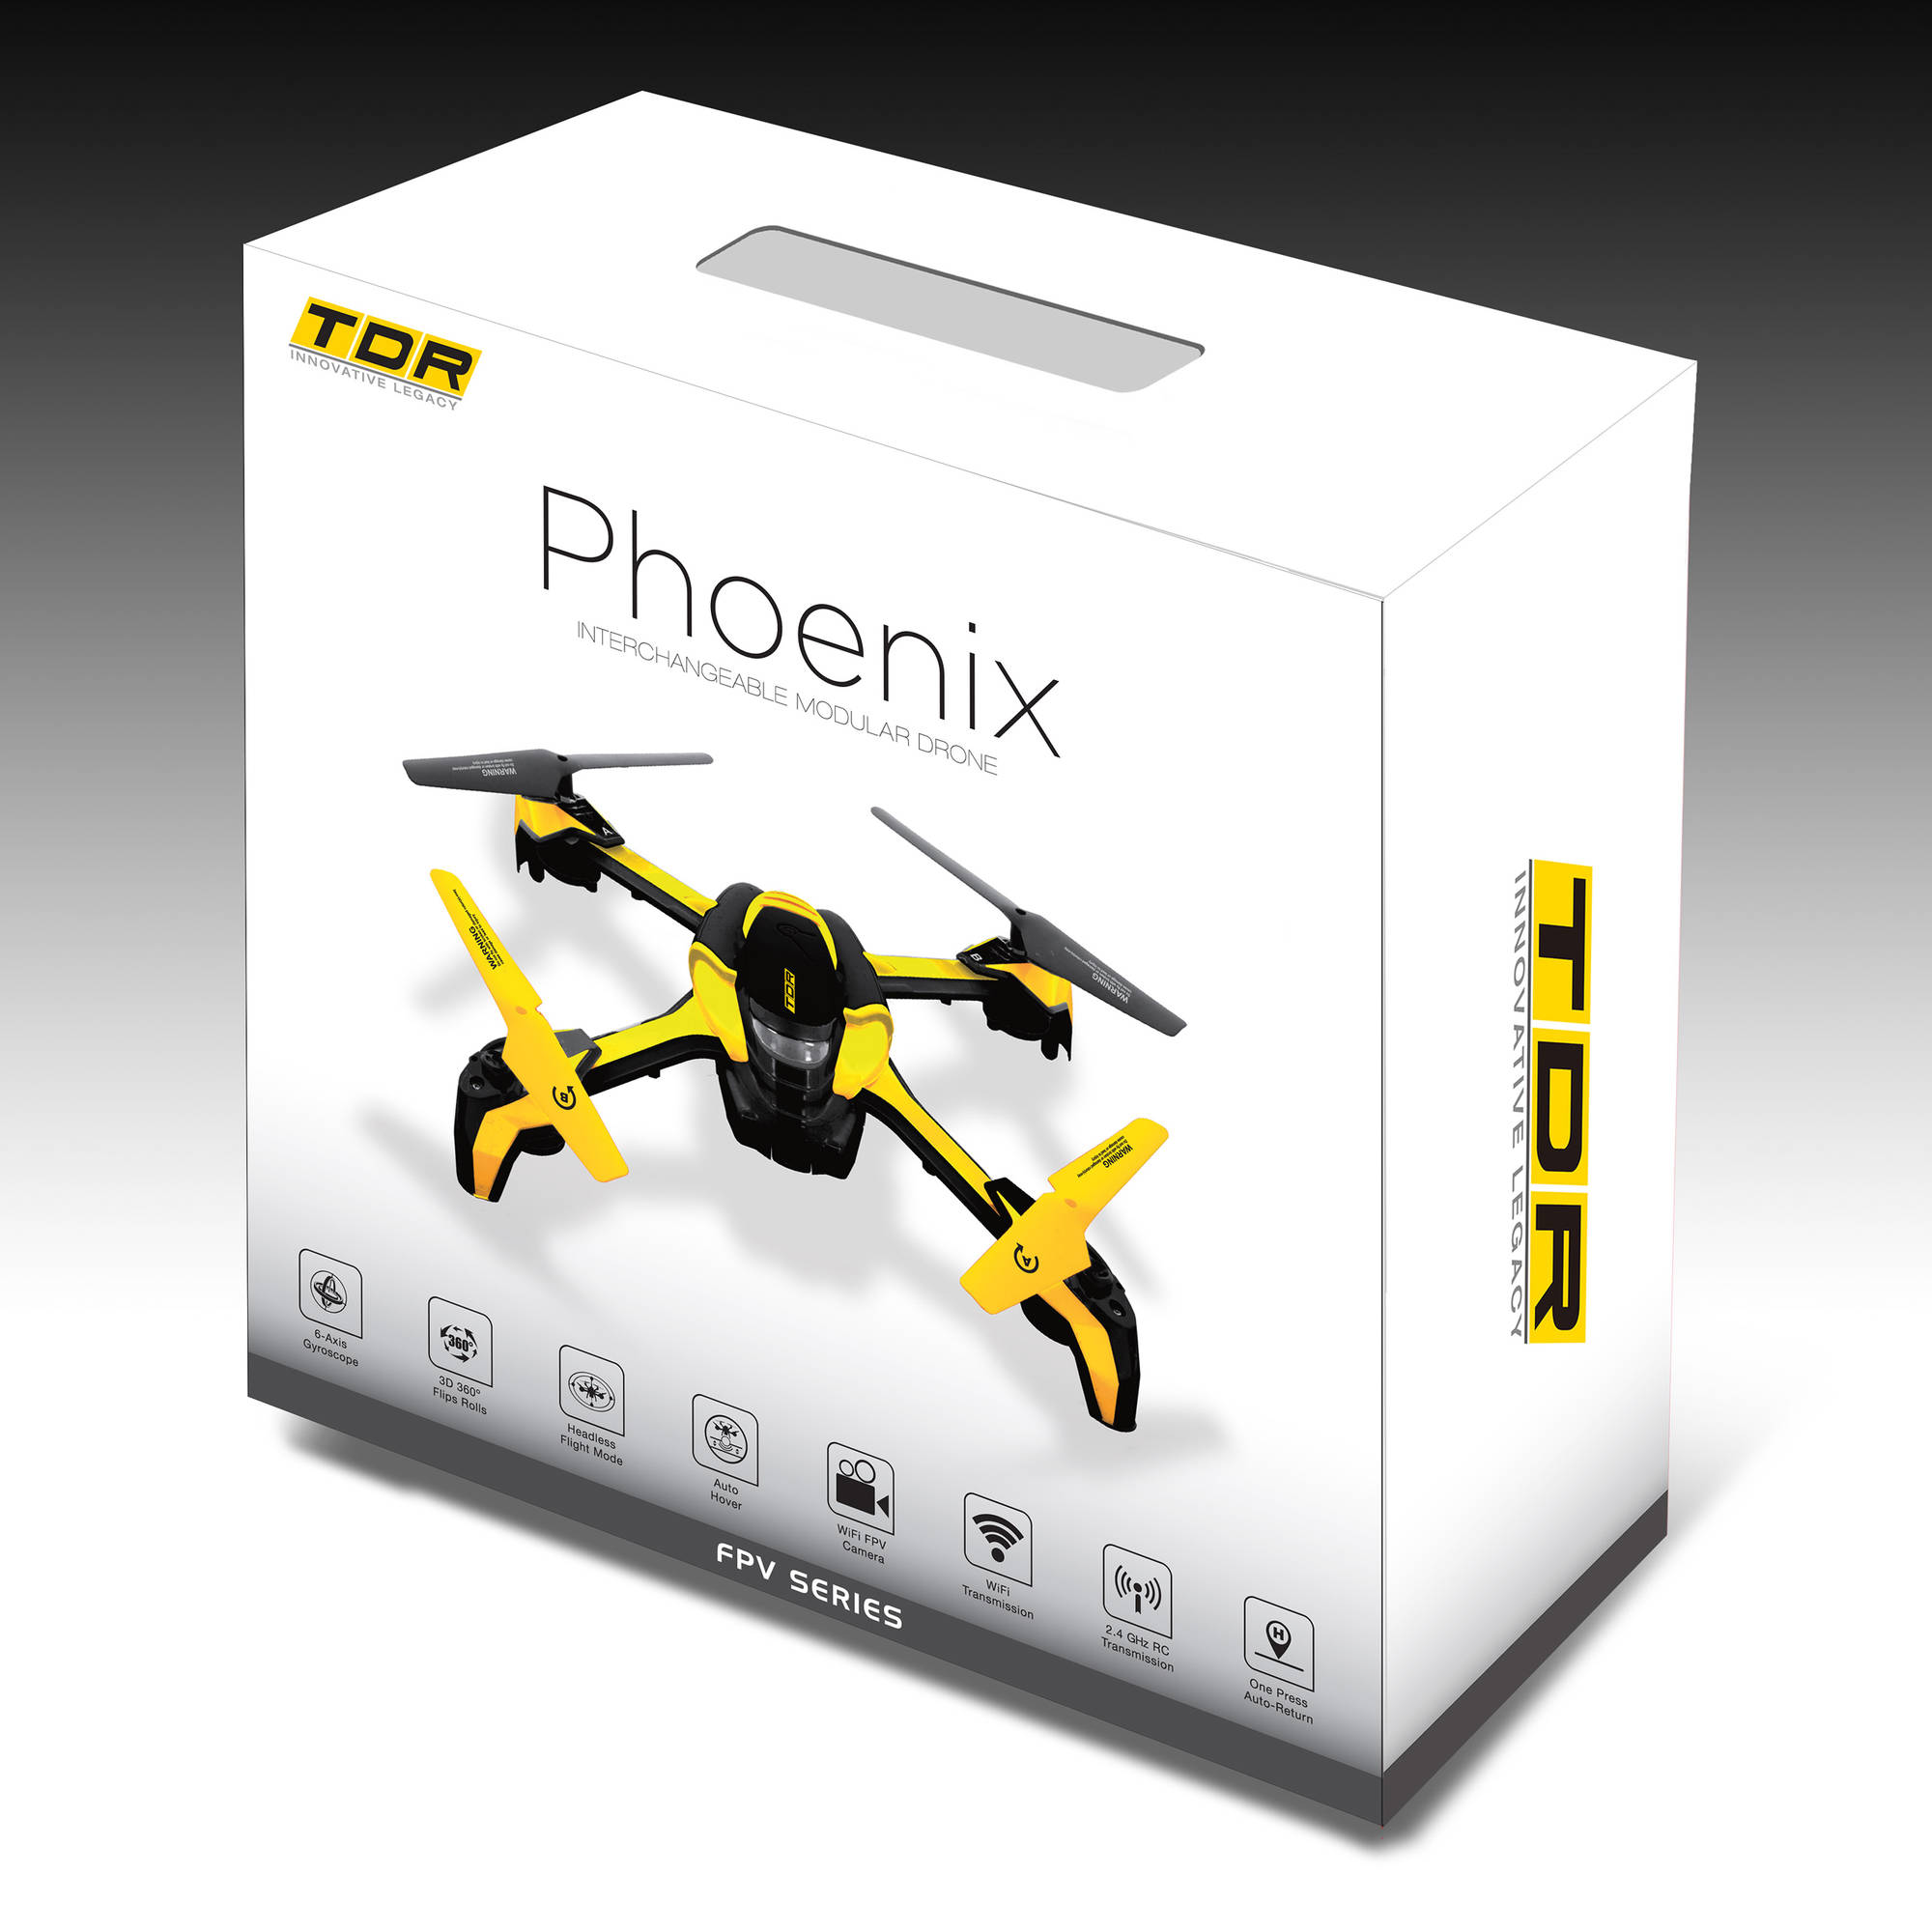 tdr phoenix drone reviews